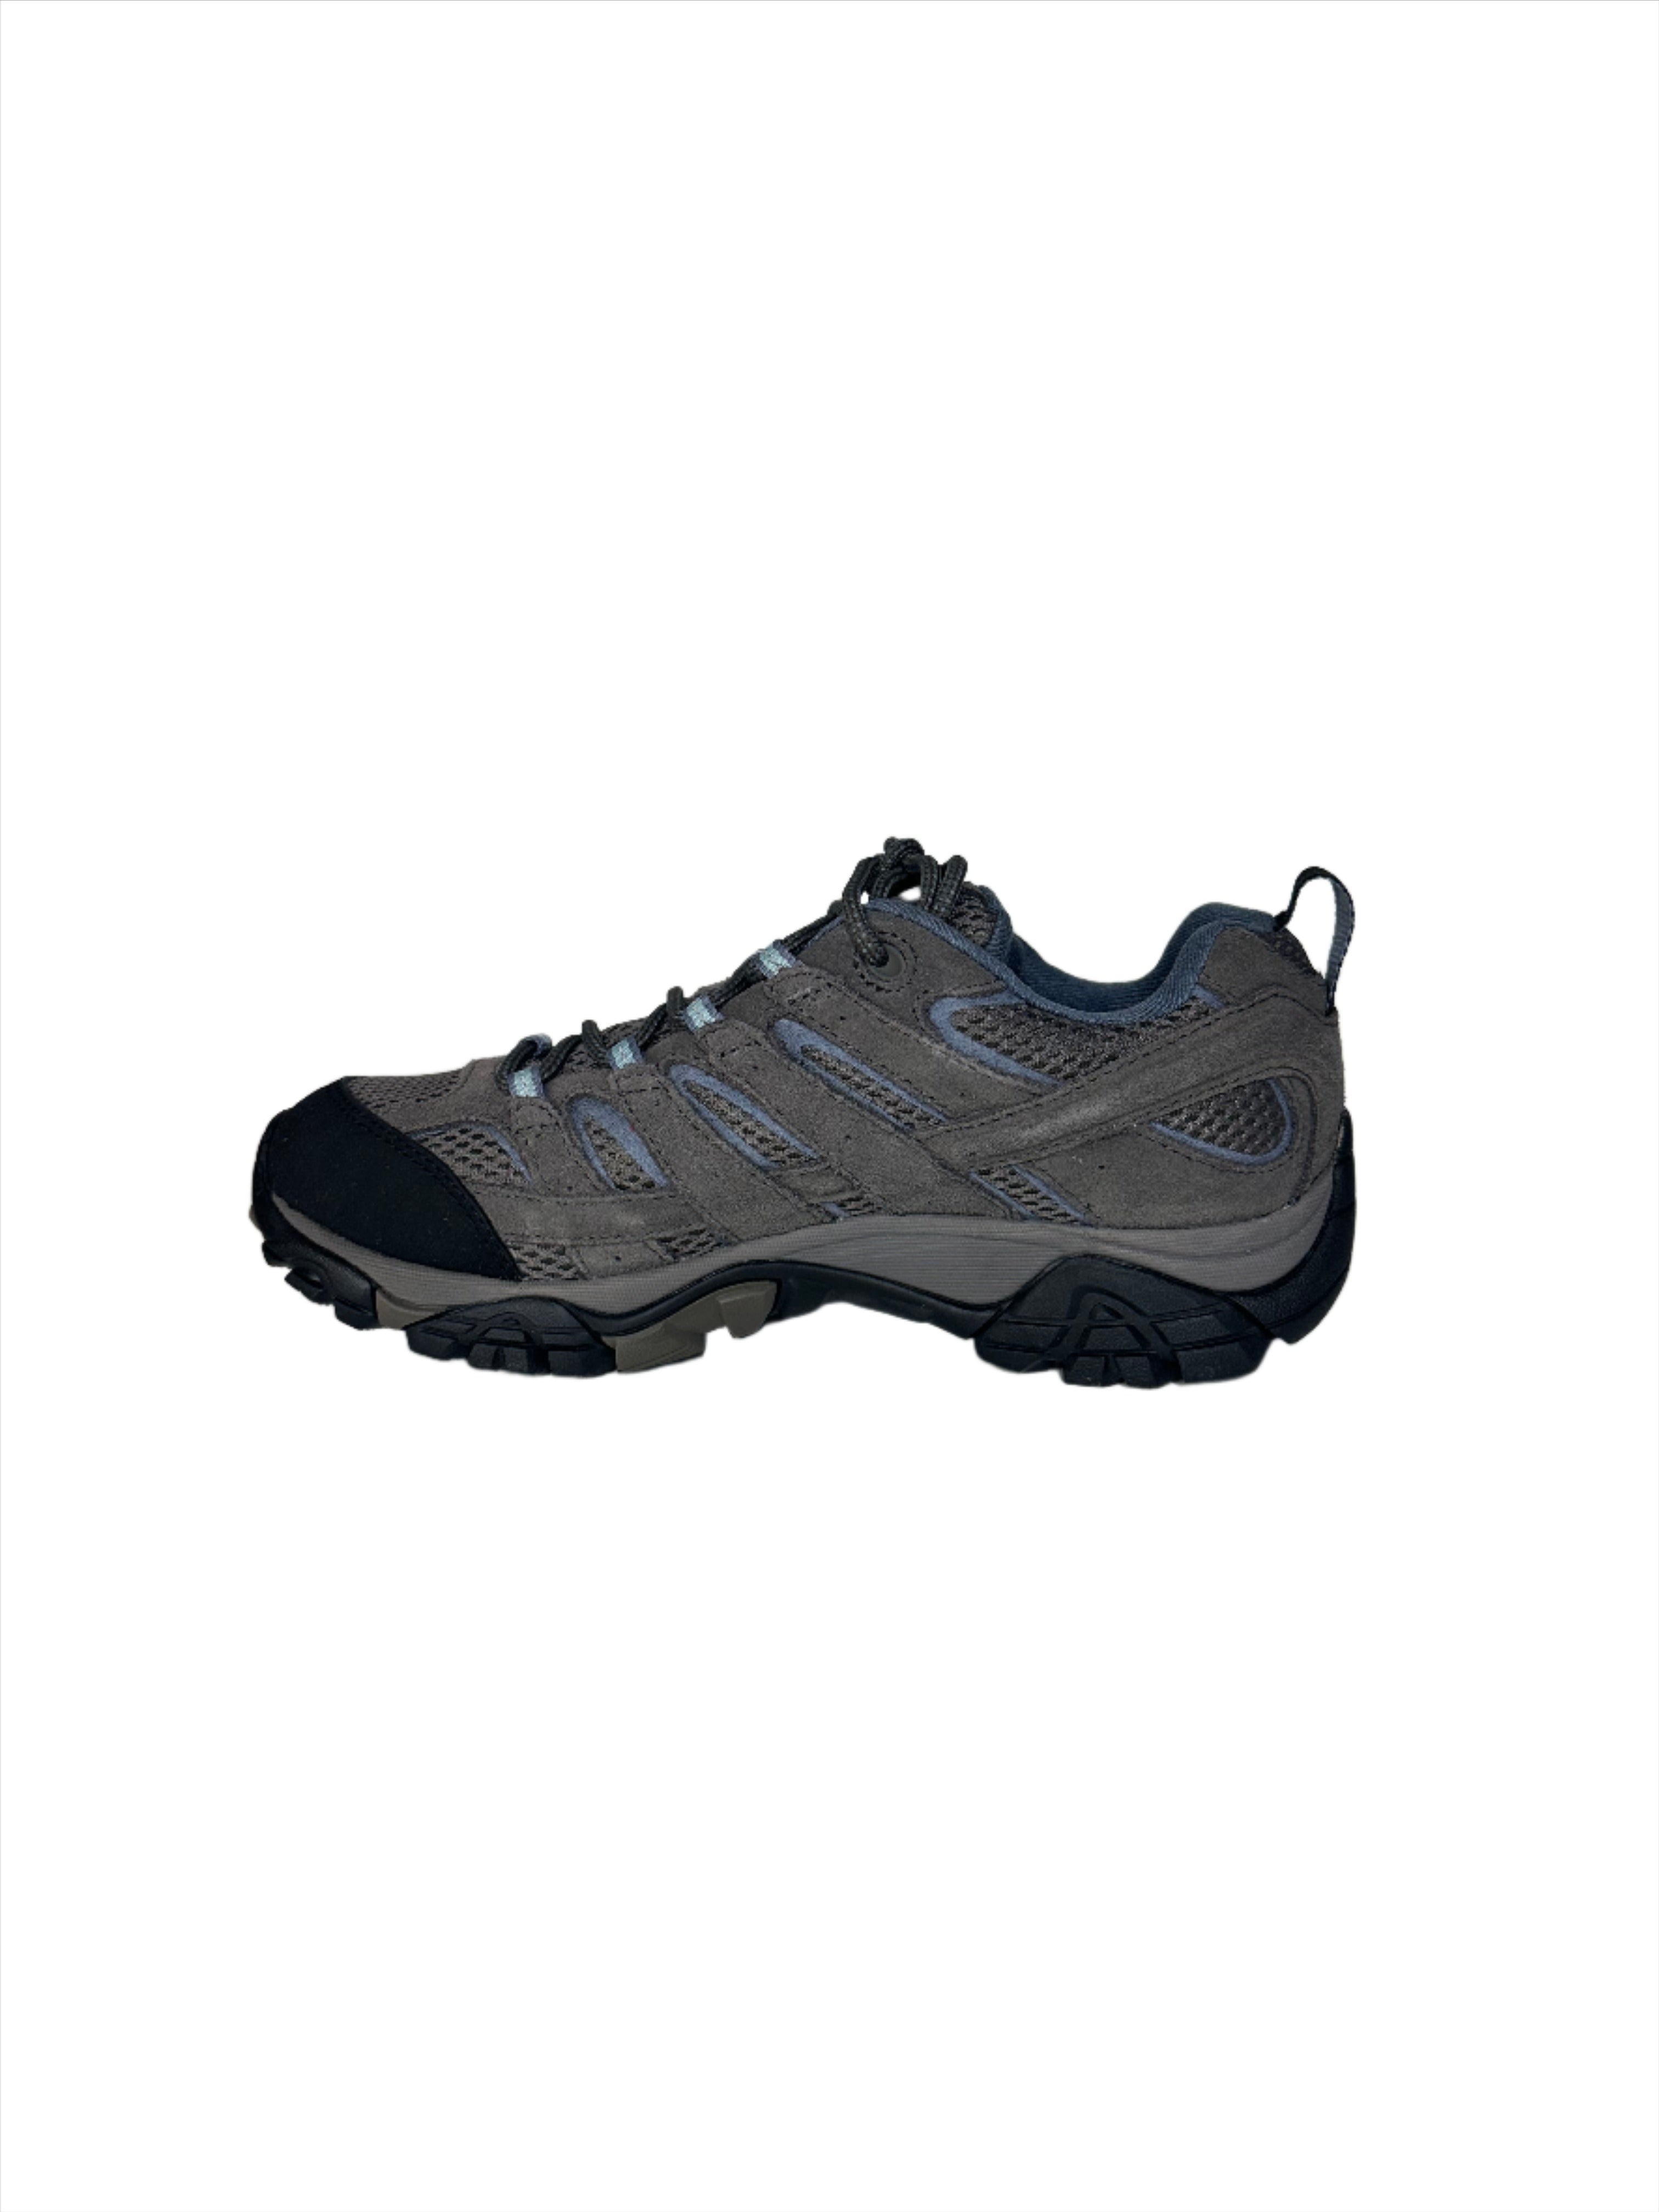 Merrell Women's Moab 2 Waterproof Hiking Shoes Granite